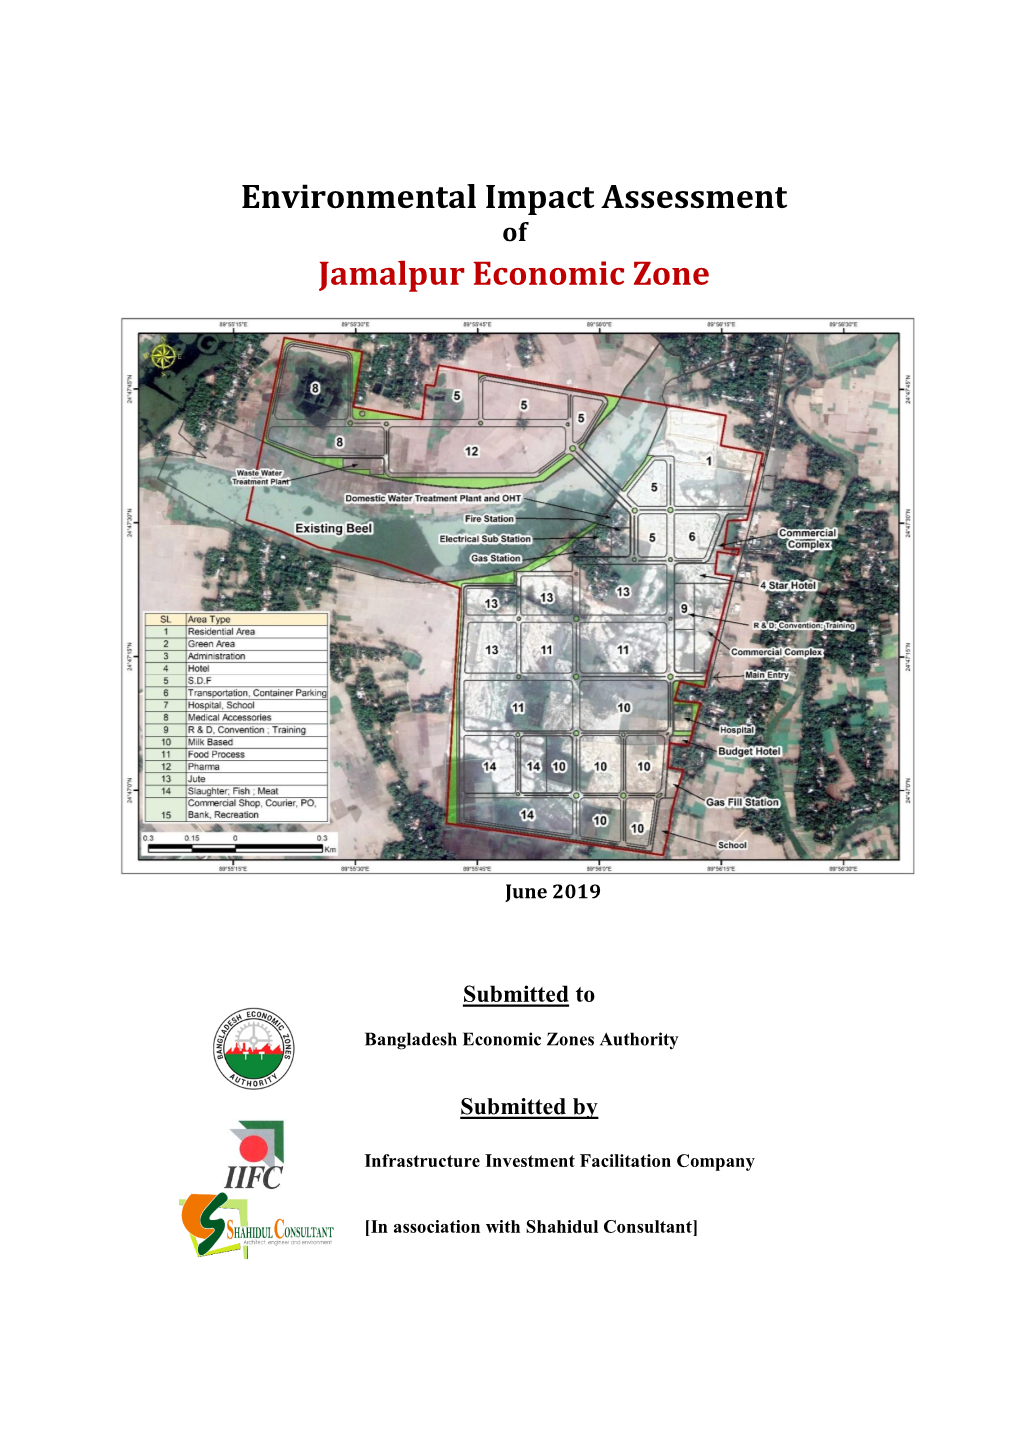 Environmental Impact Assessment Jamalpur Economic Zone